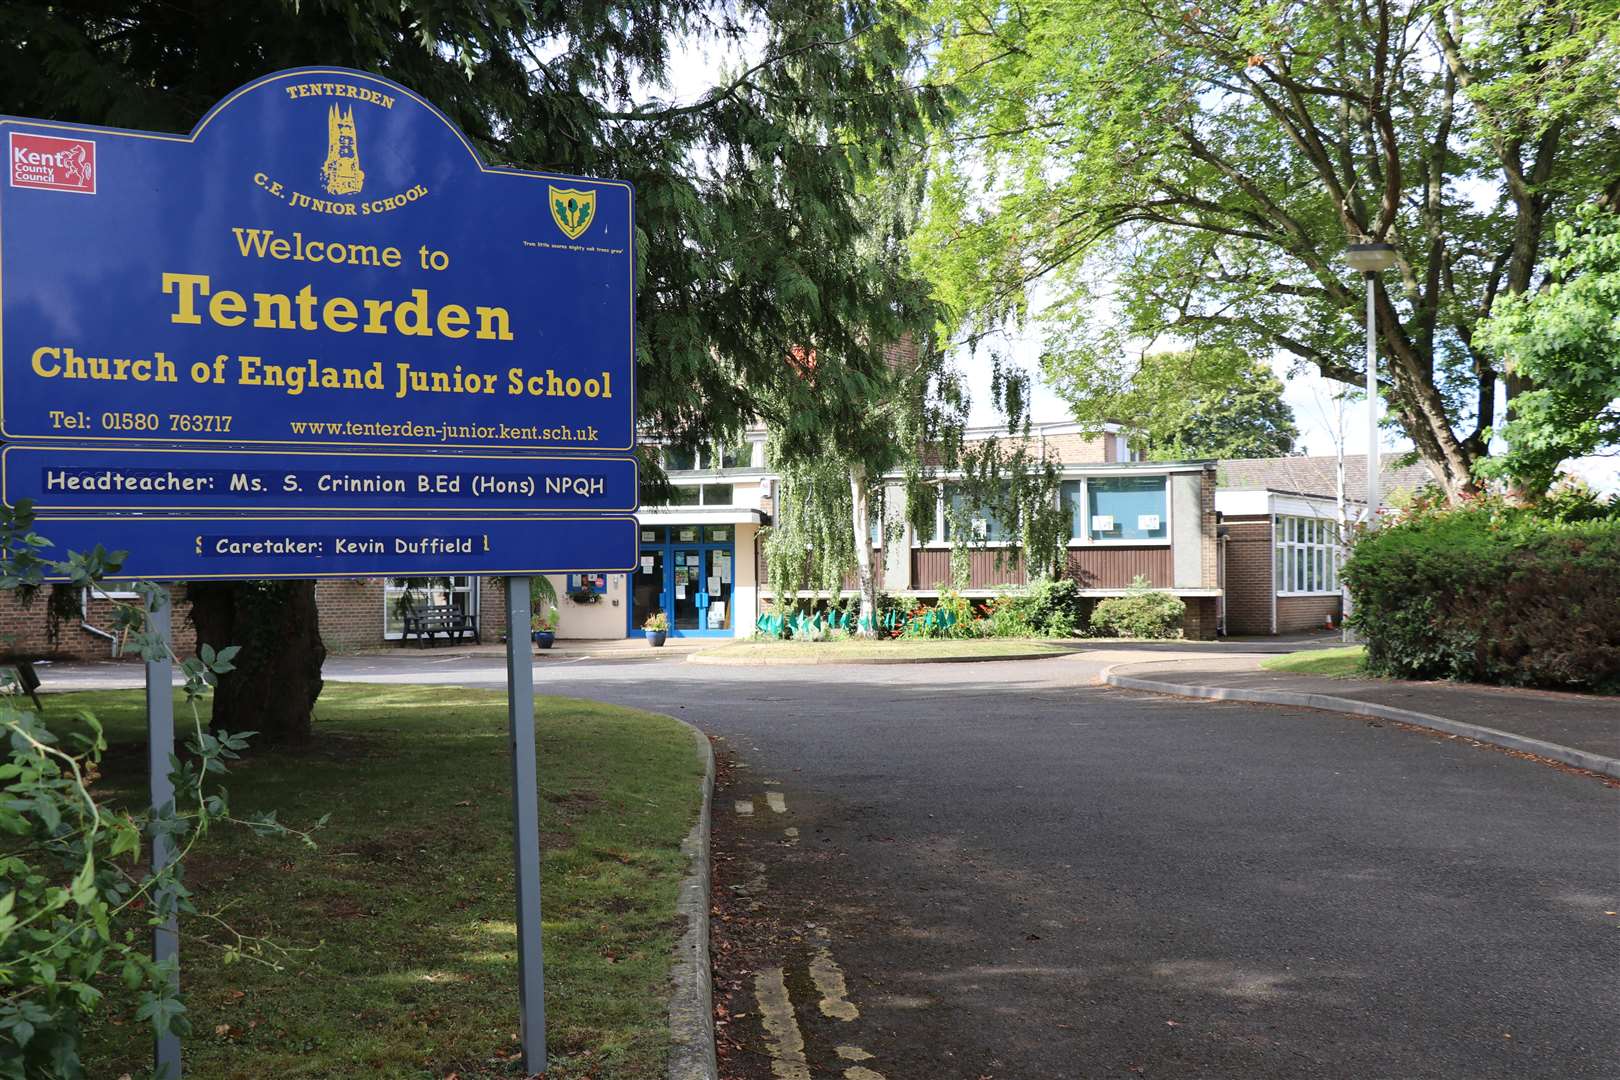 Tenterden Junior School where the incident took place